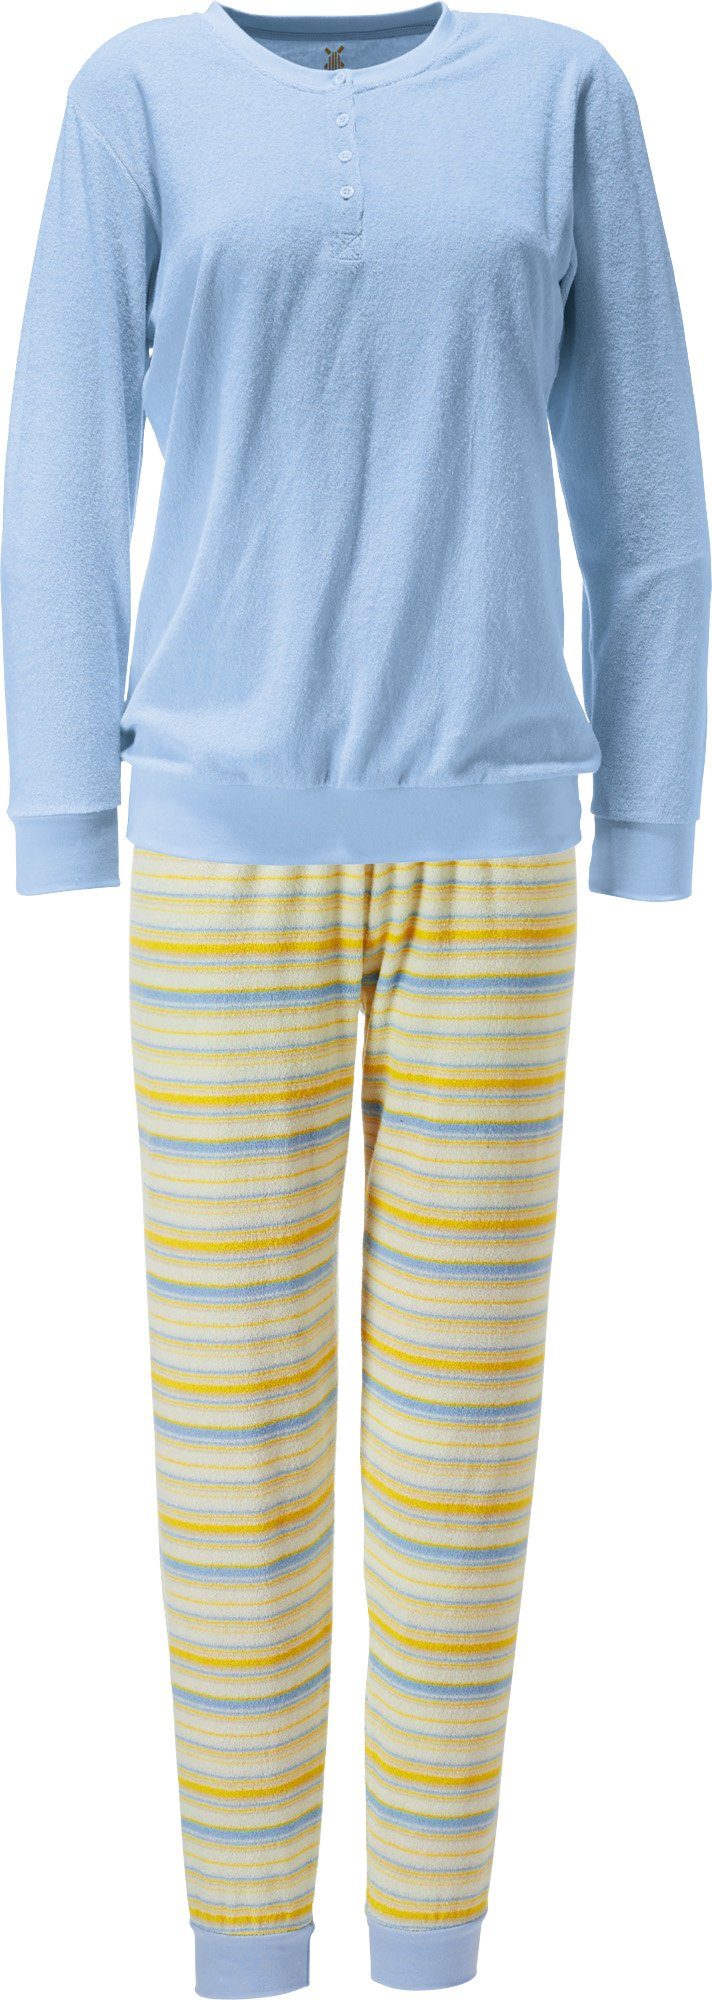 Erwin Müller Pyjama Damen-Schlafanzug Frottee Streifen